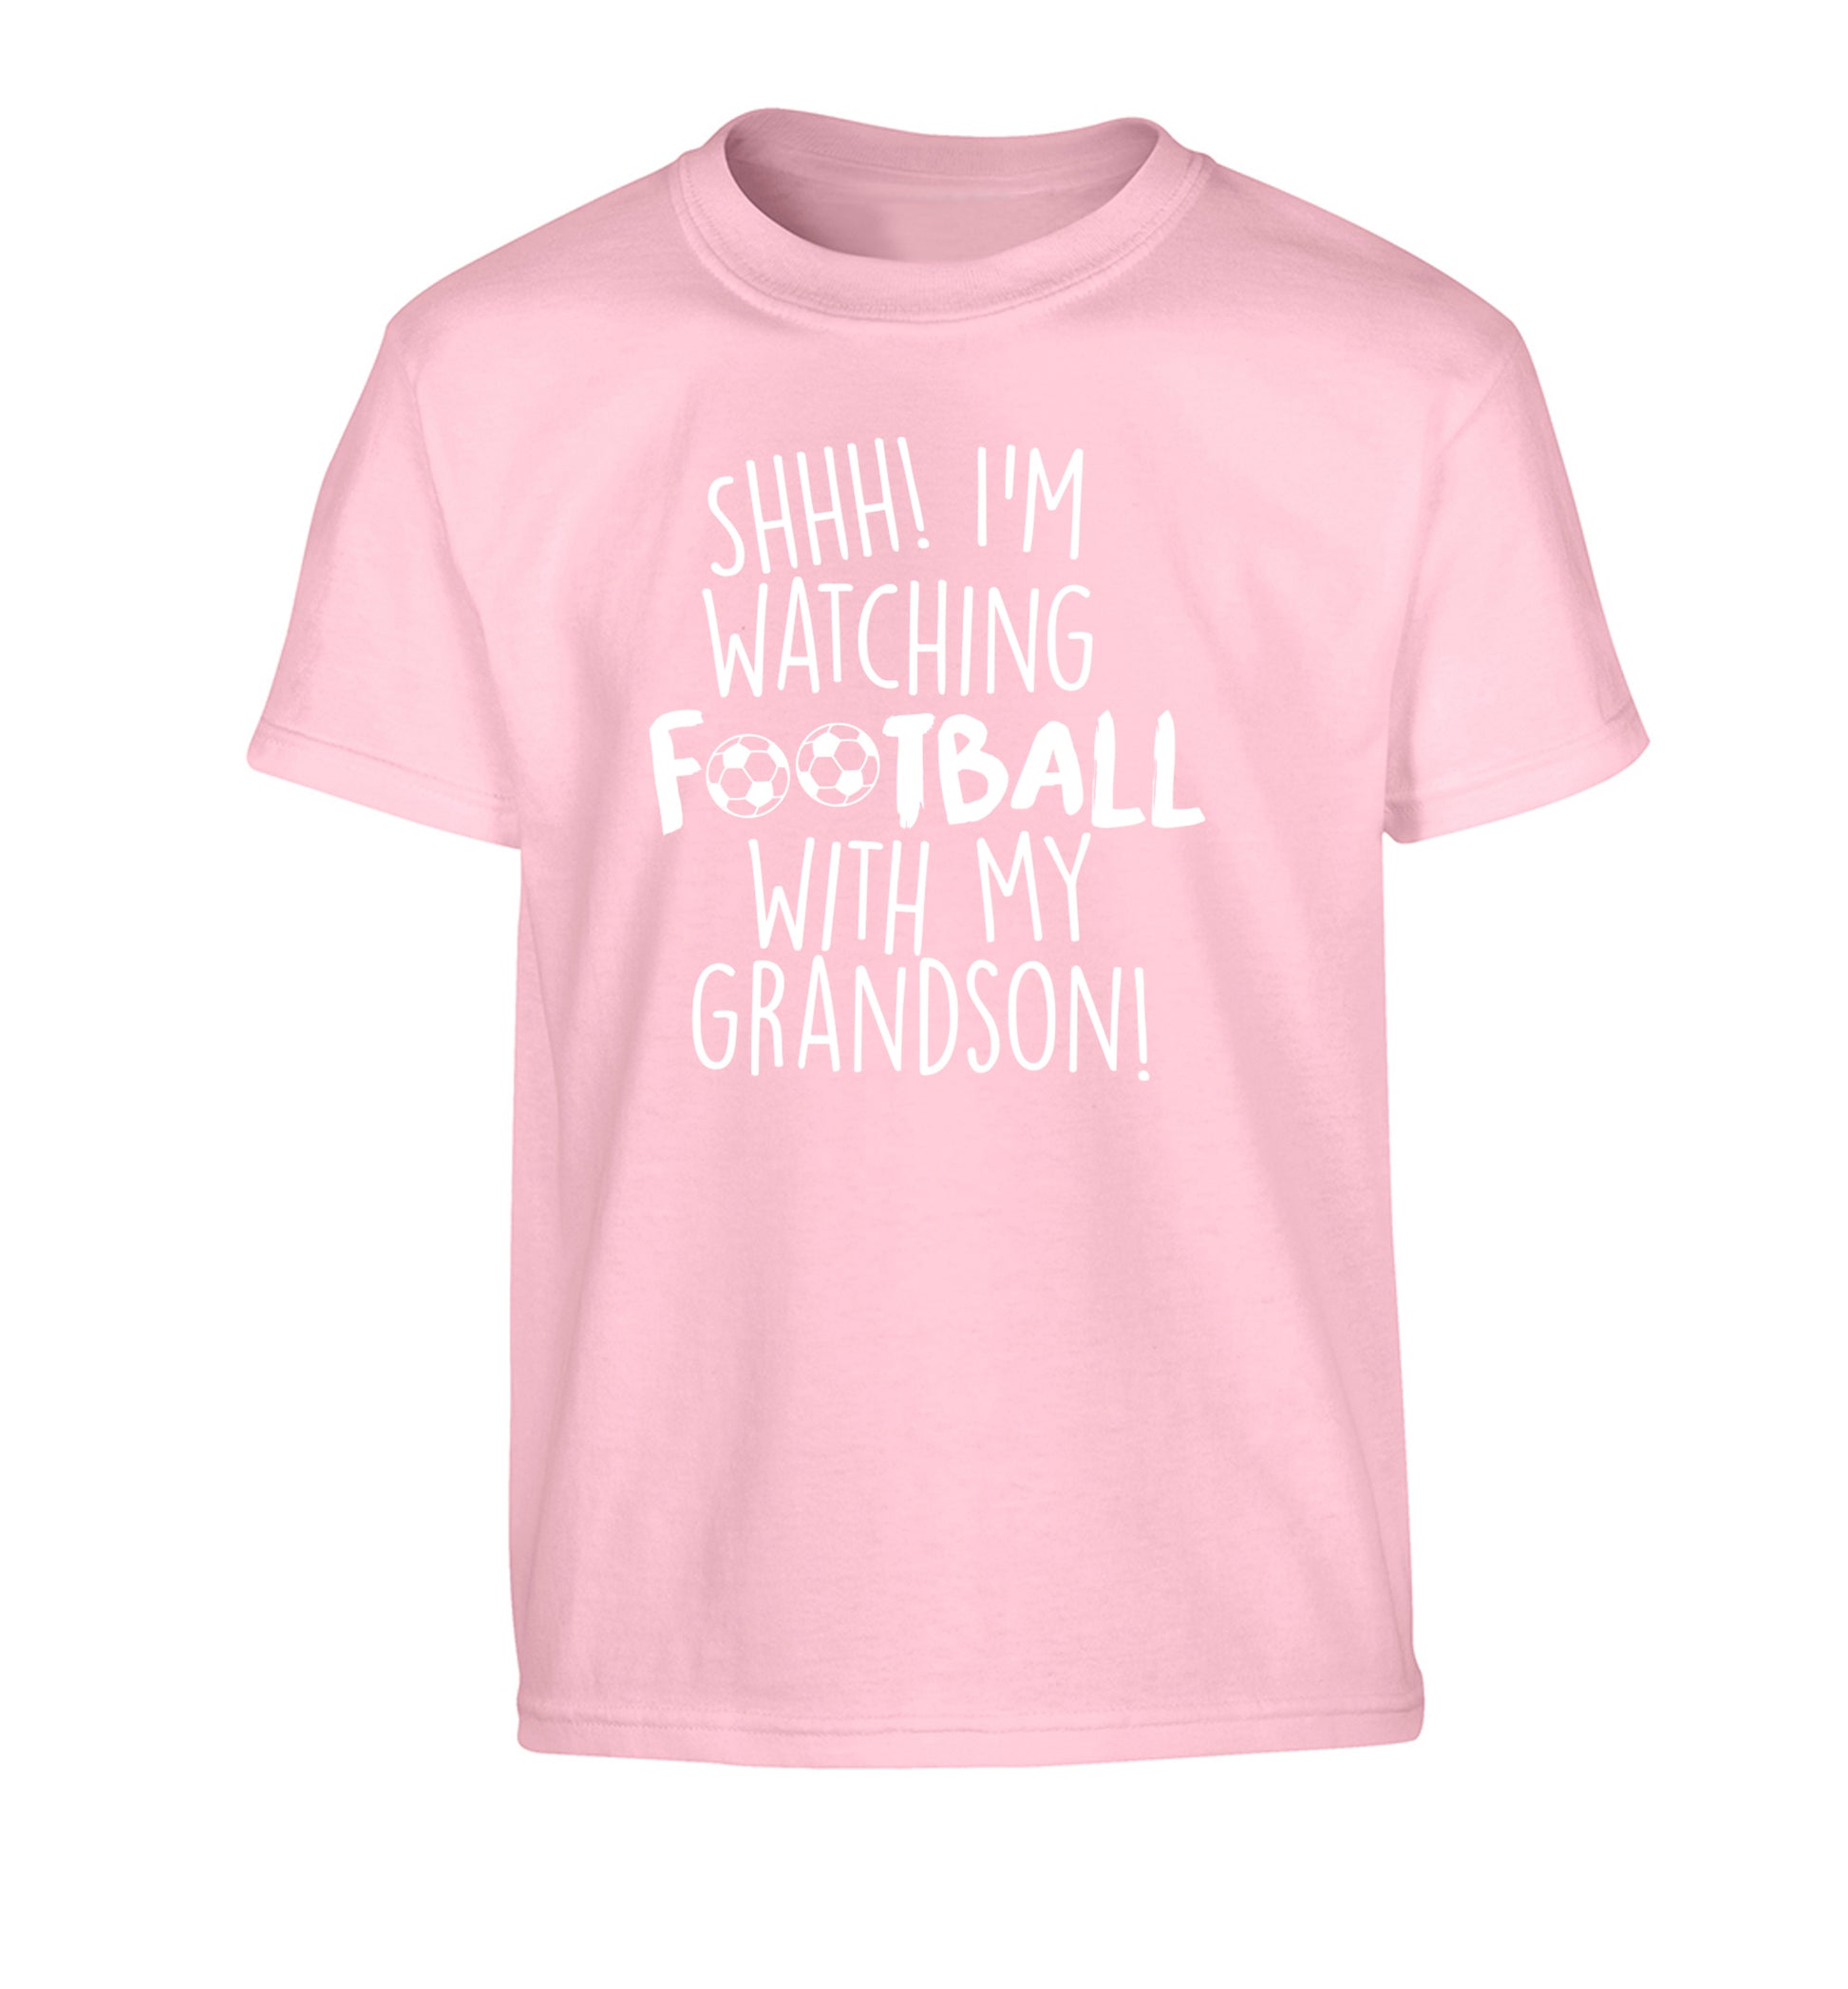 Shhh I'm watching football with my grandson Children's light pink Tshirt 12-14 Years